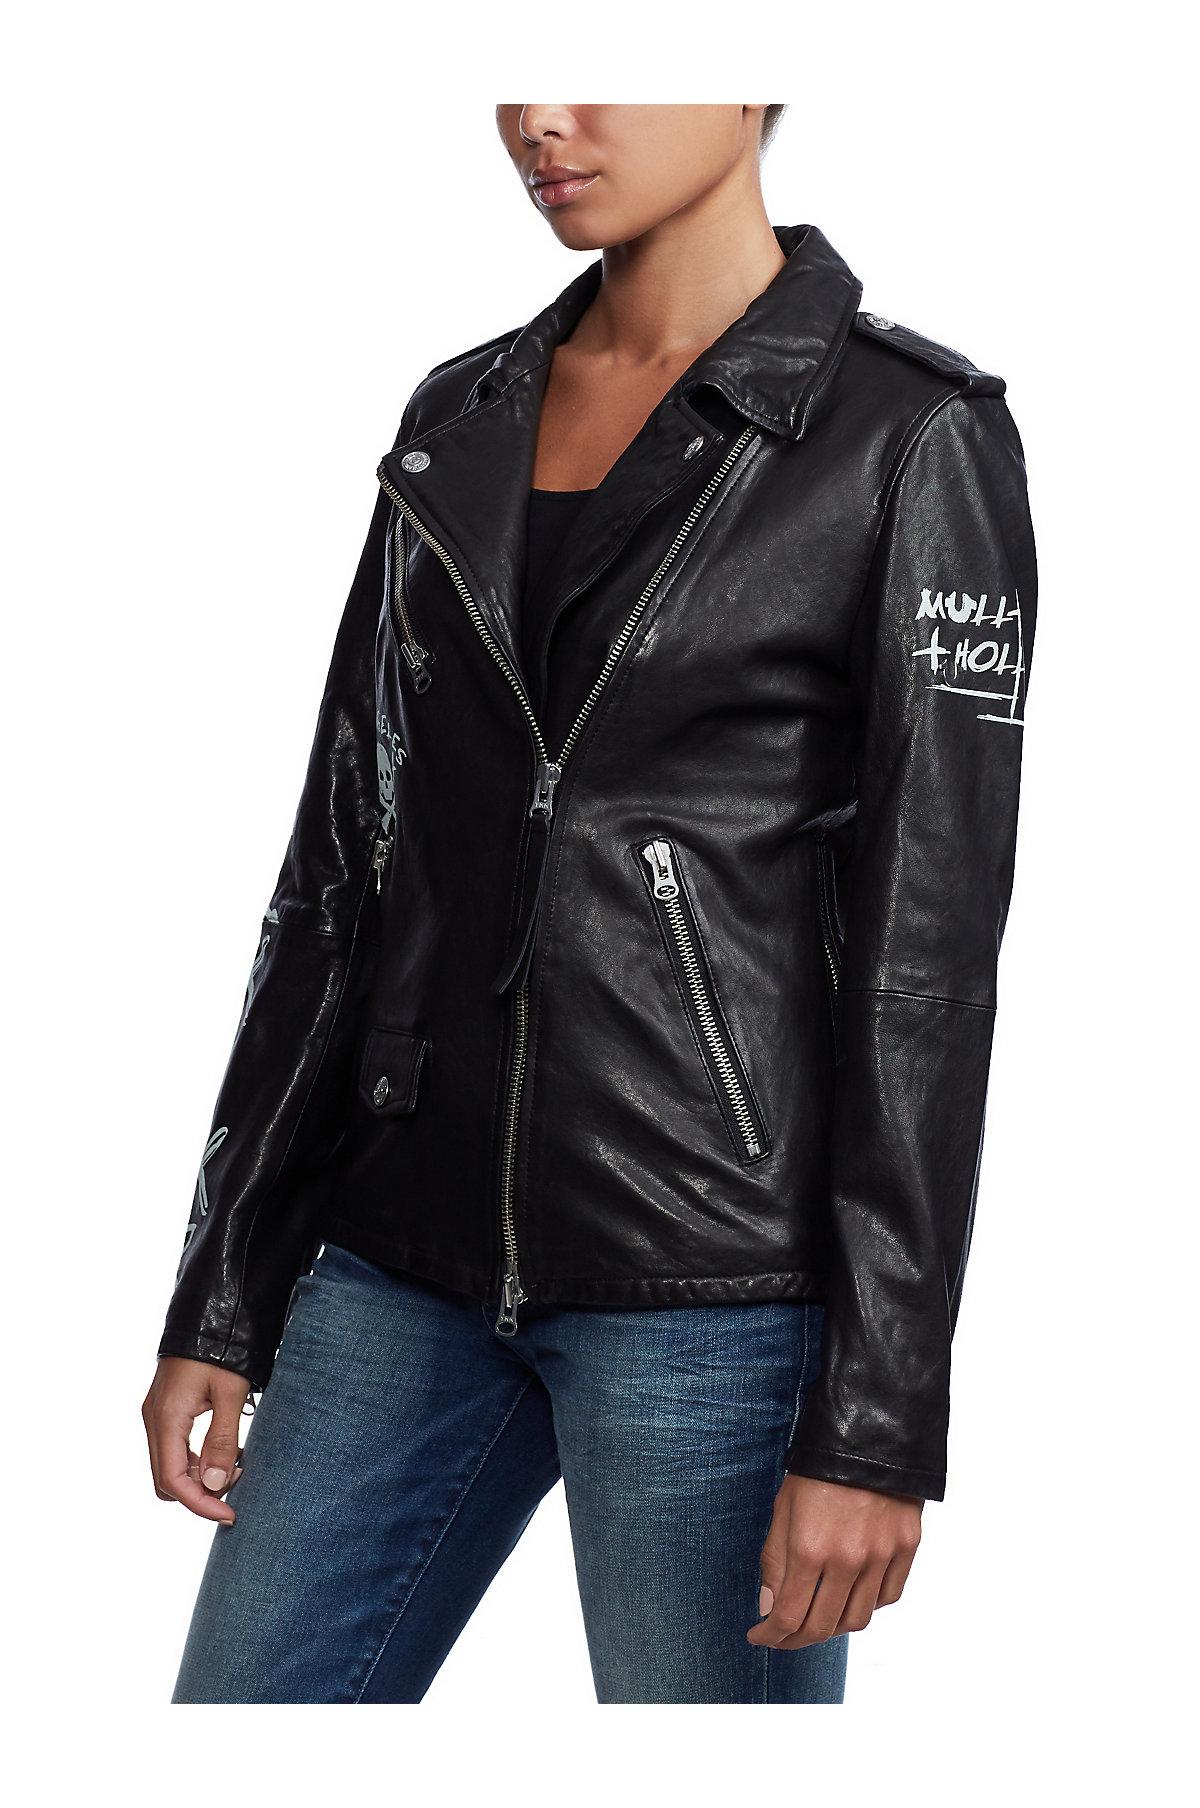 True Religion Leather Jacket in Black - Lyst